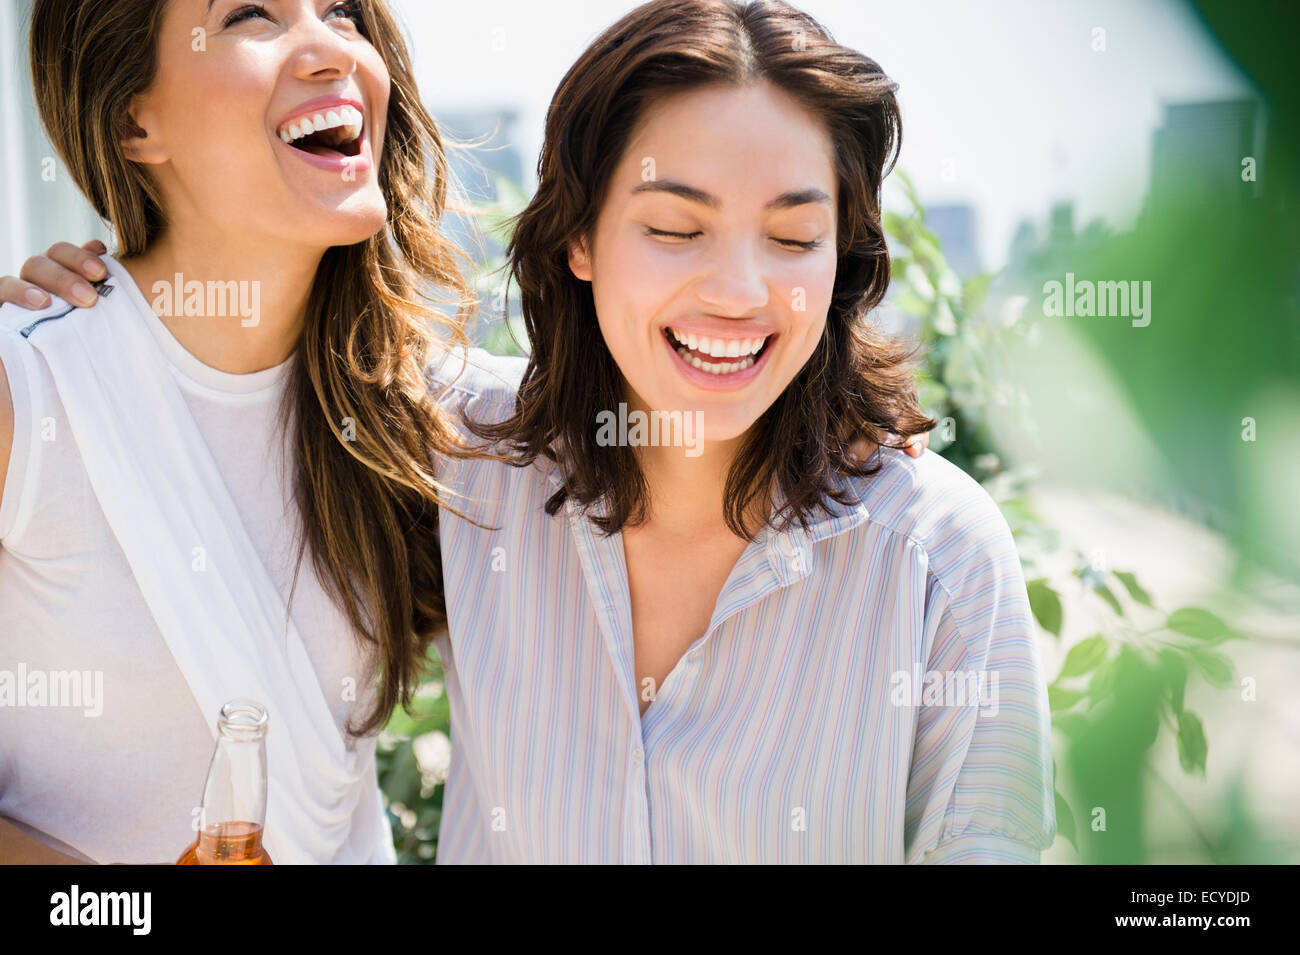 Hispanic women laughing outdoors Stock Photo